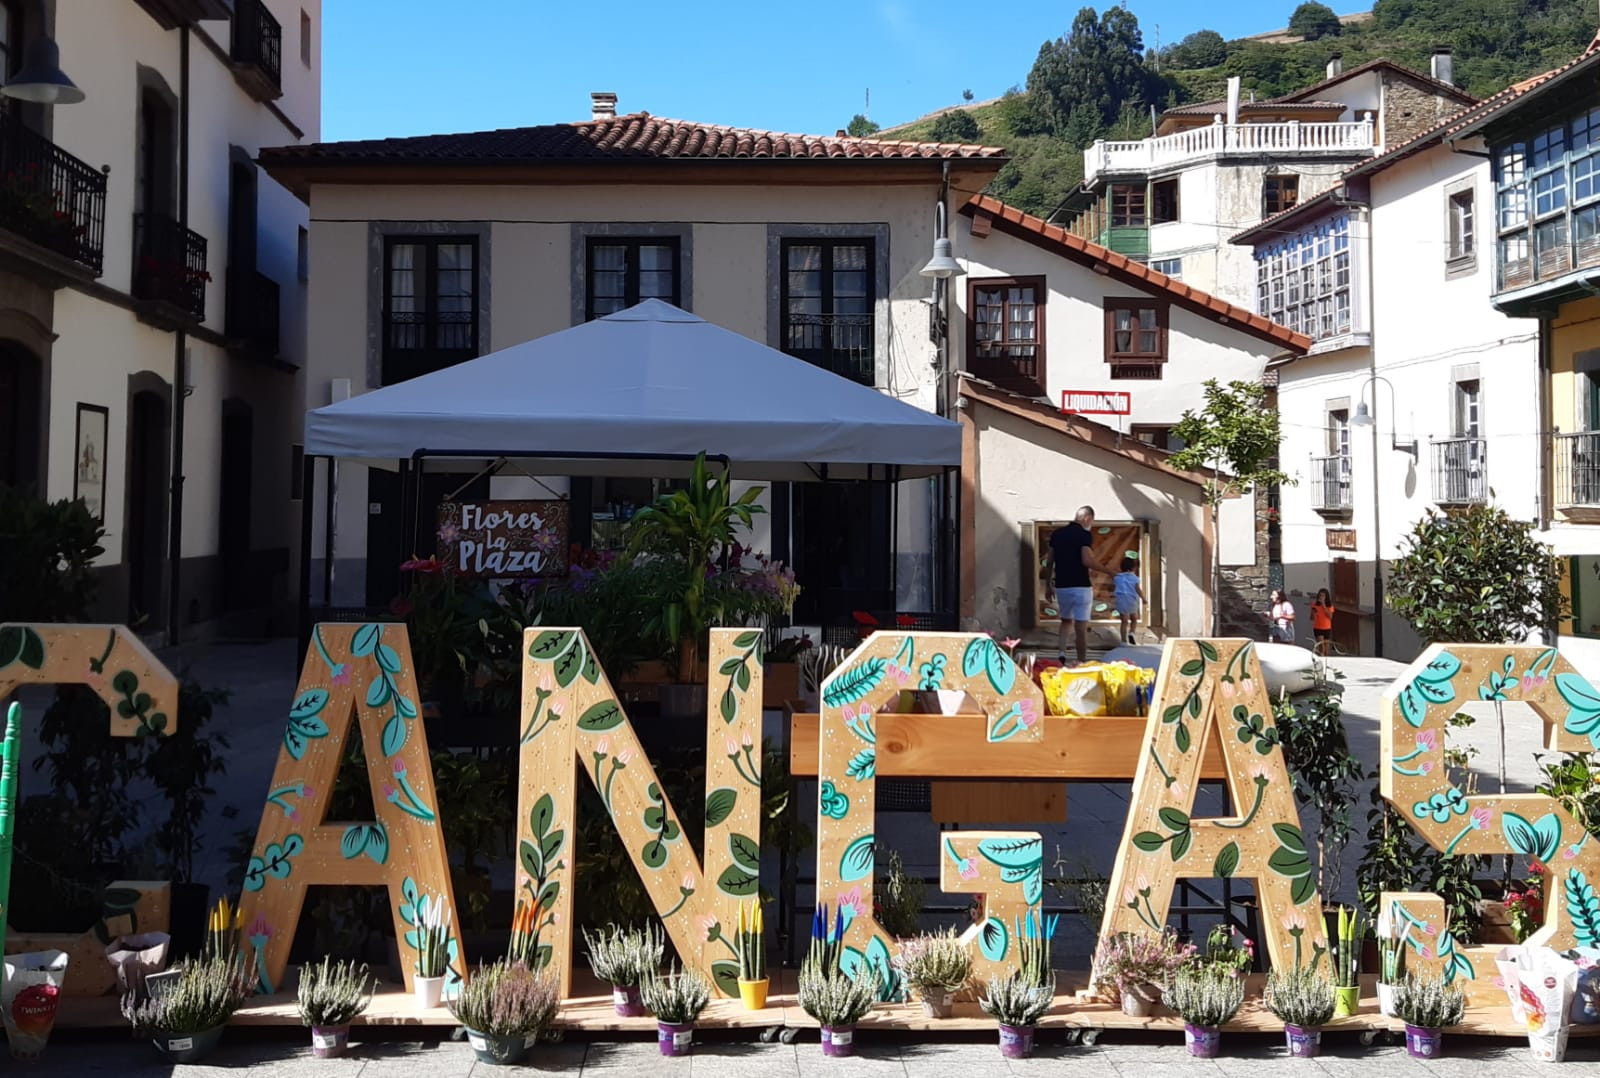 Asturias joven emprenda Visita Cangas